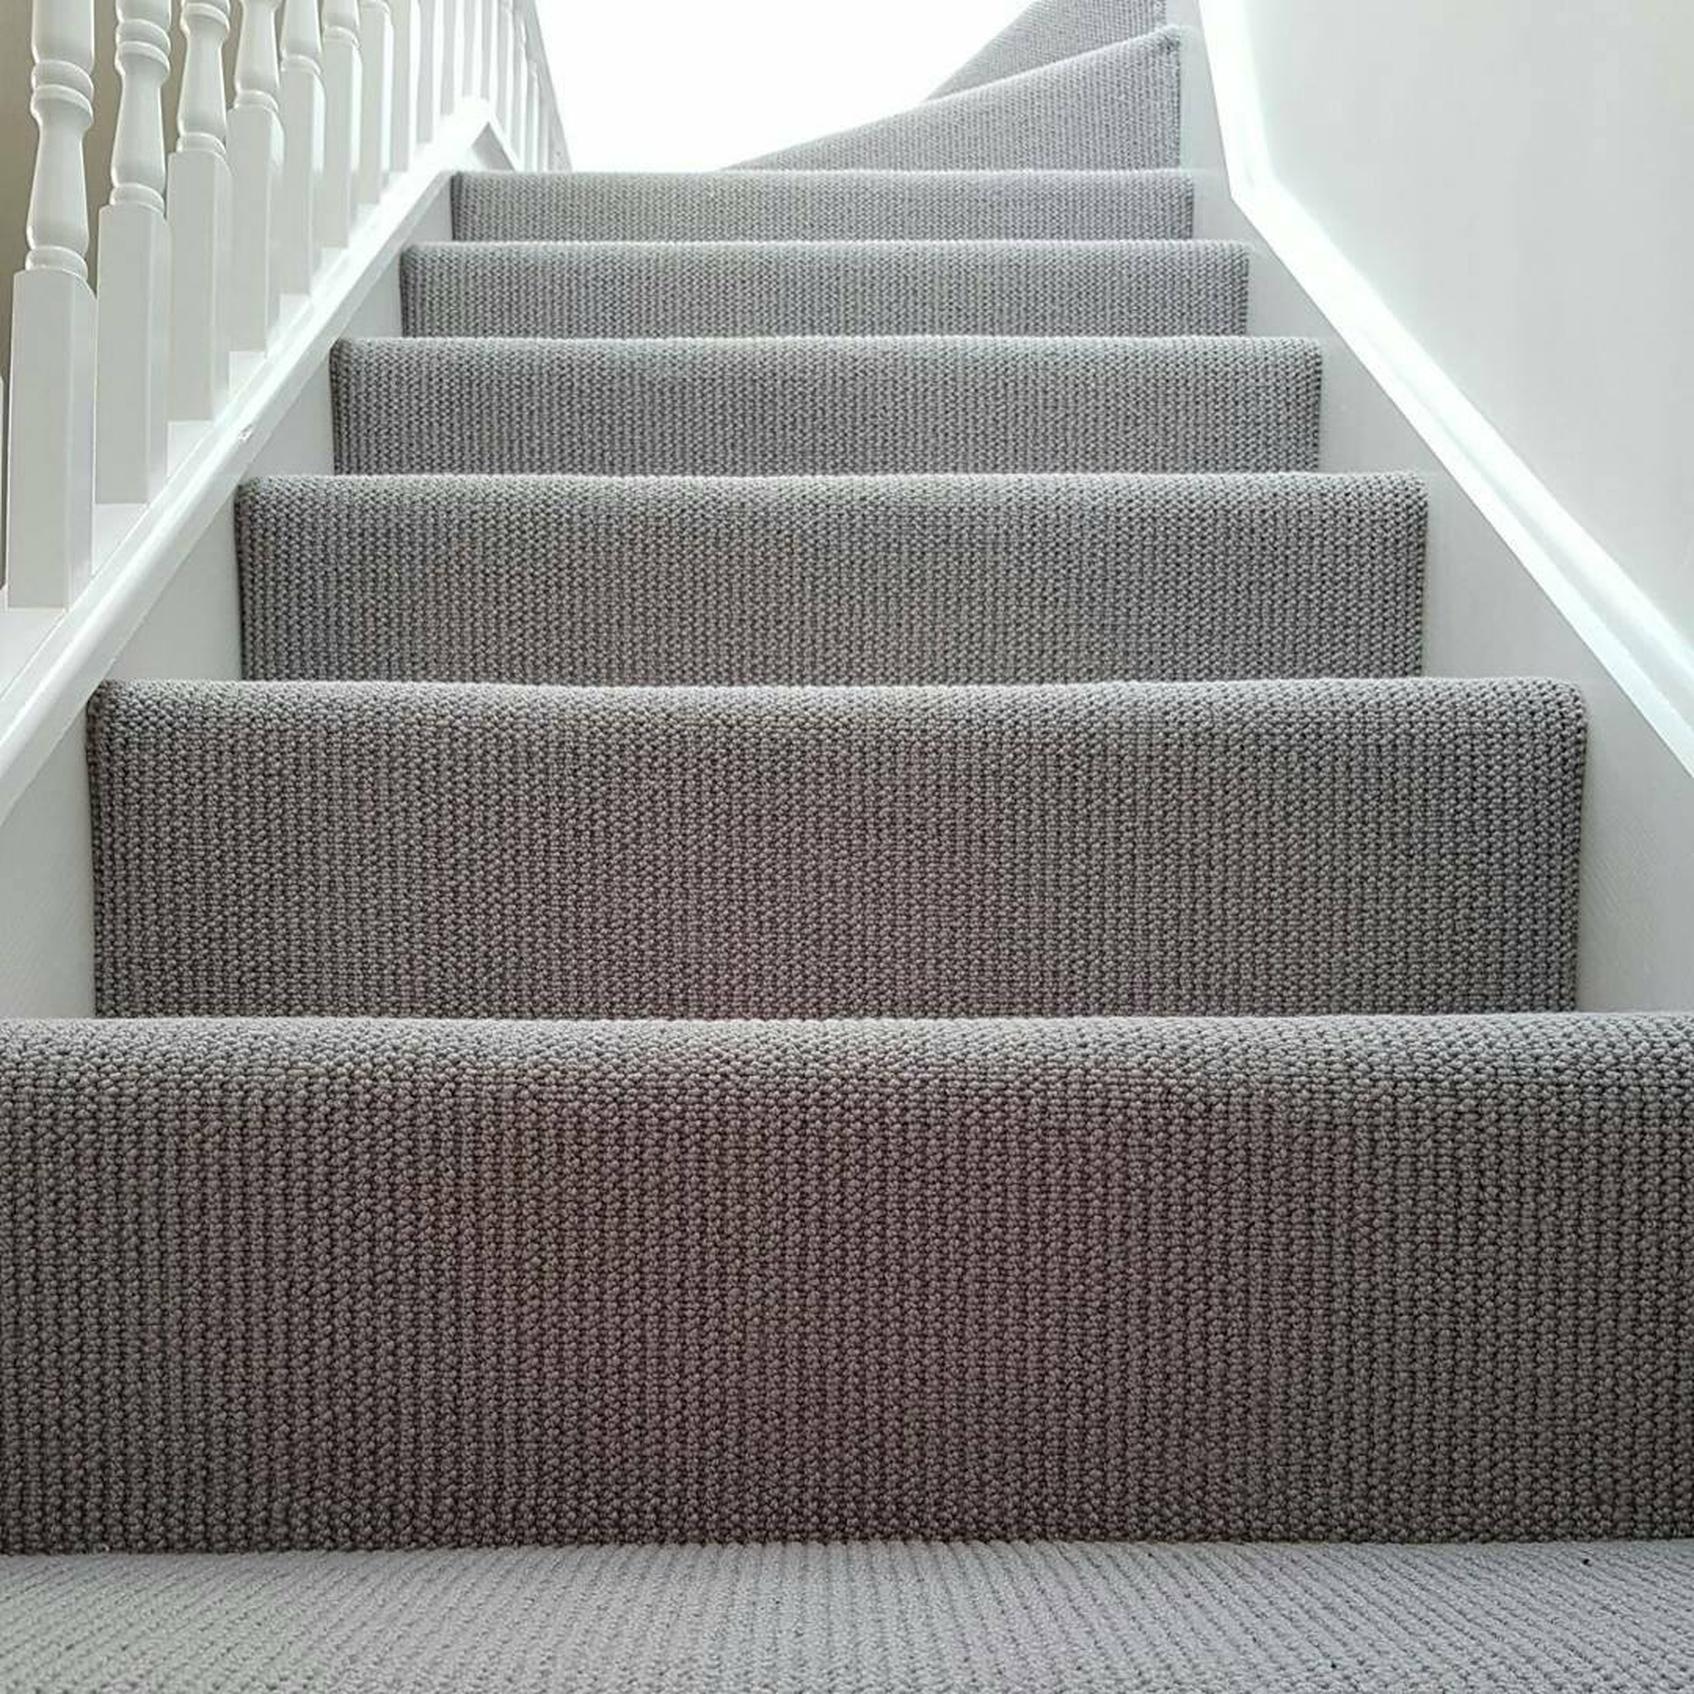 stair carpet - carpet fitter worthing